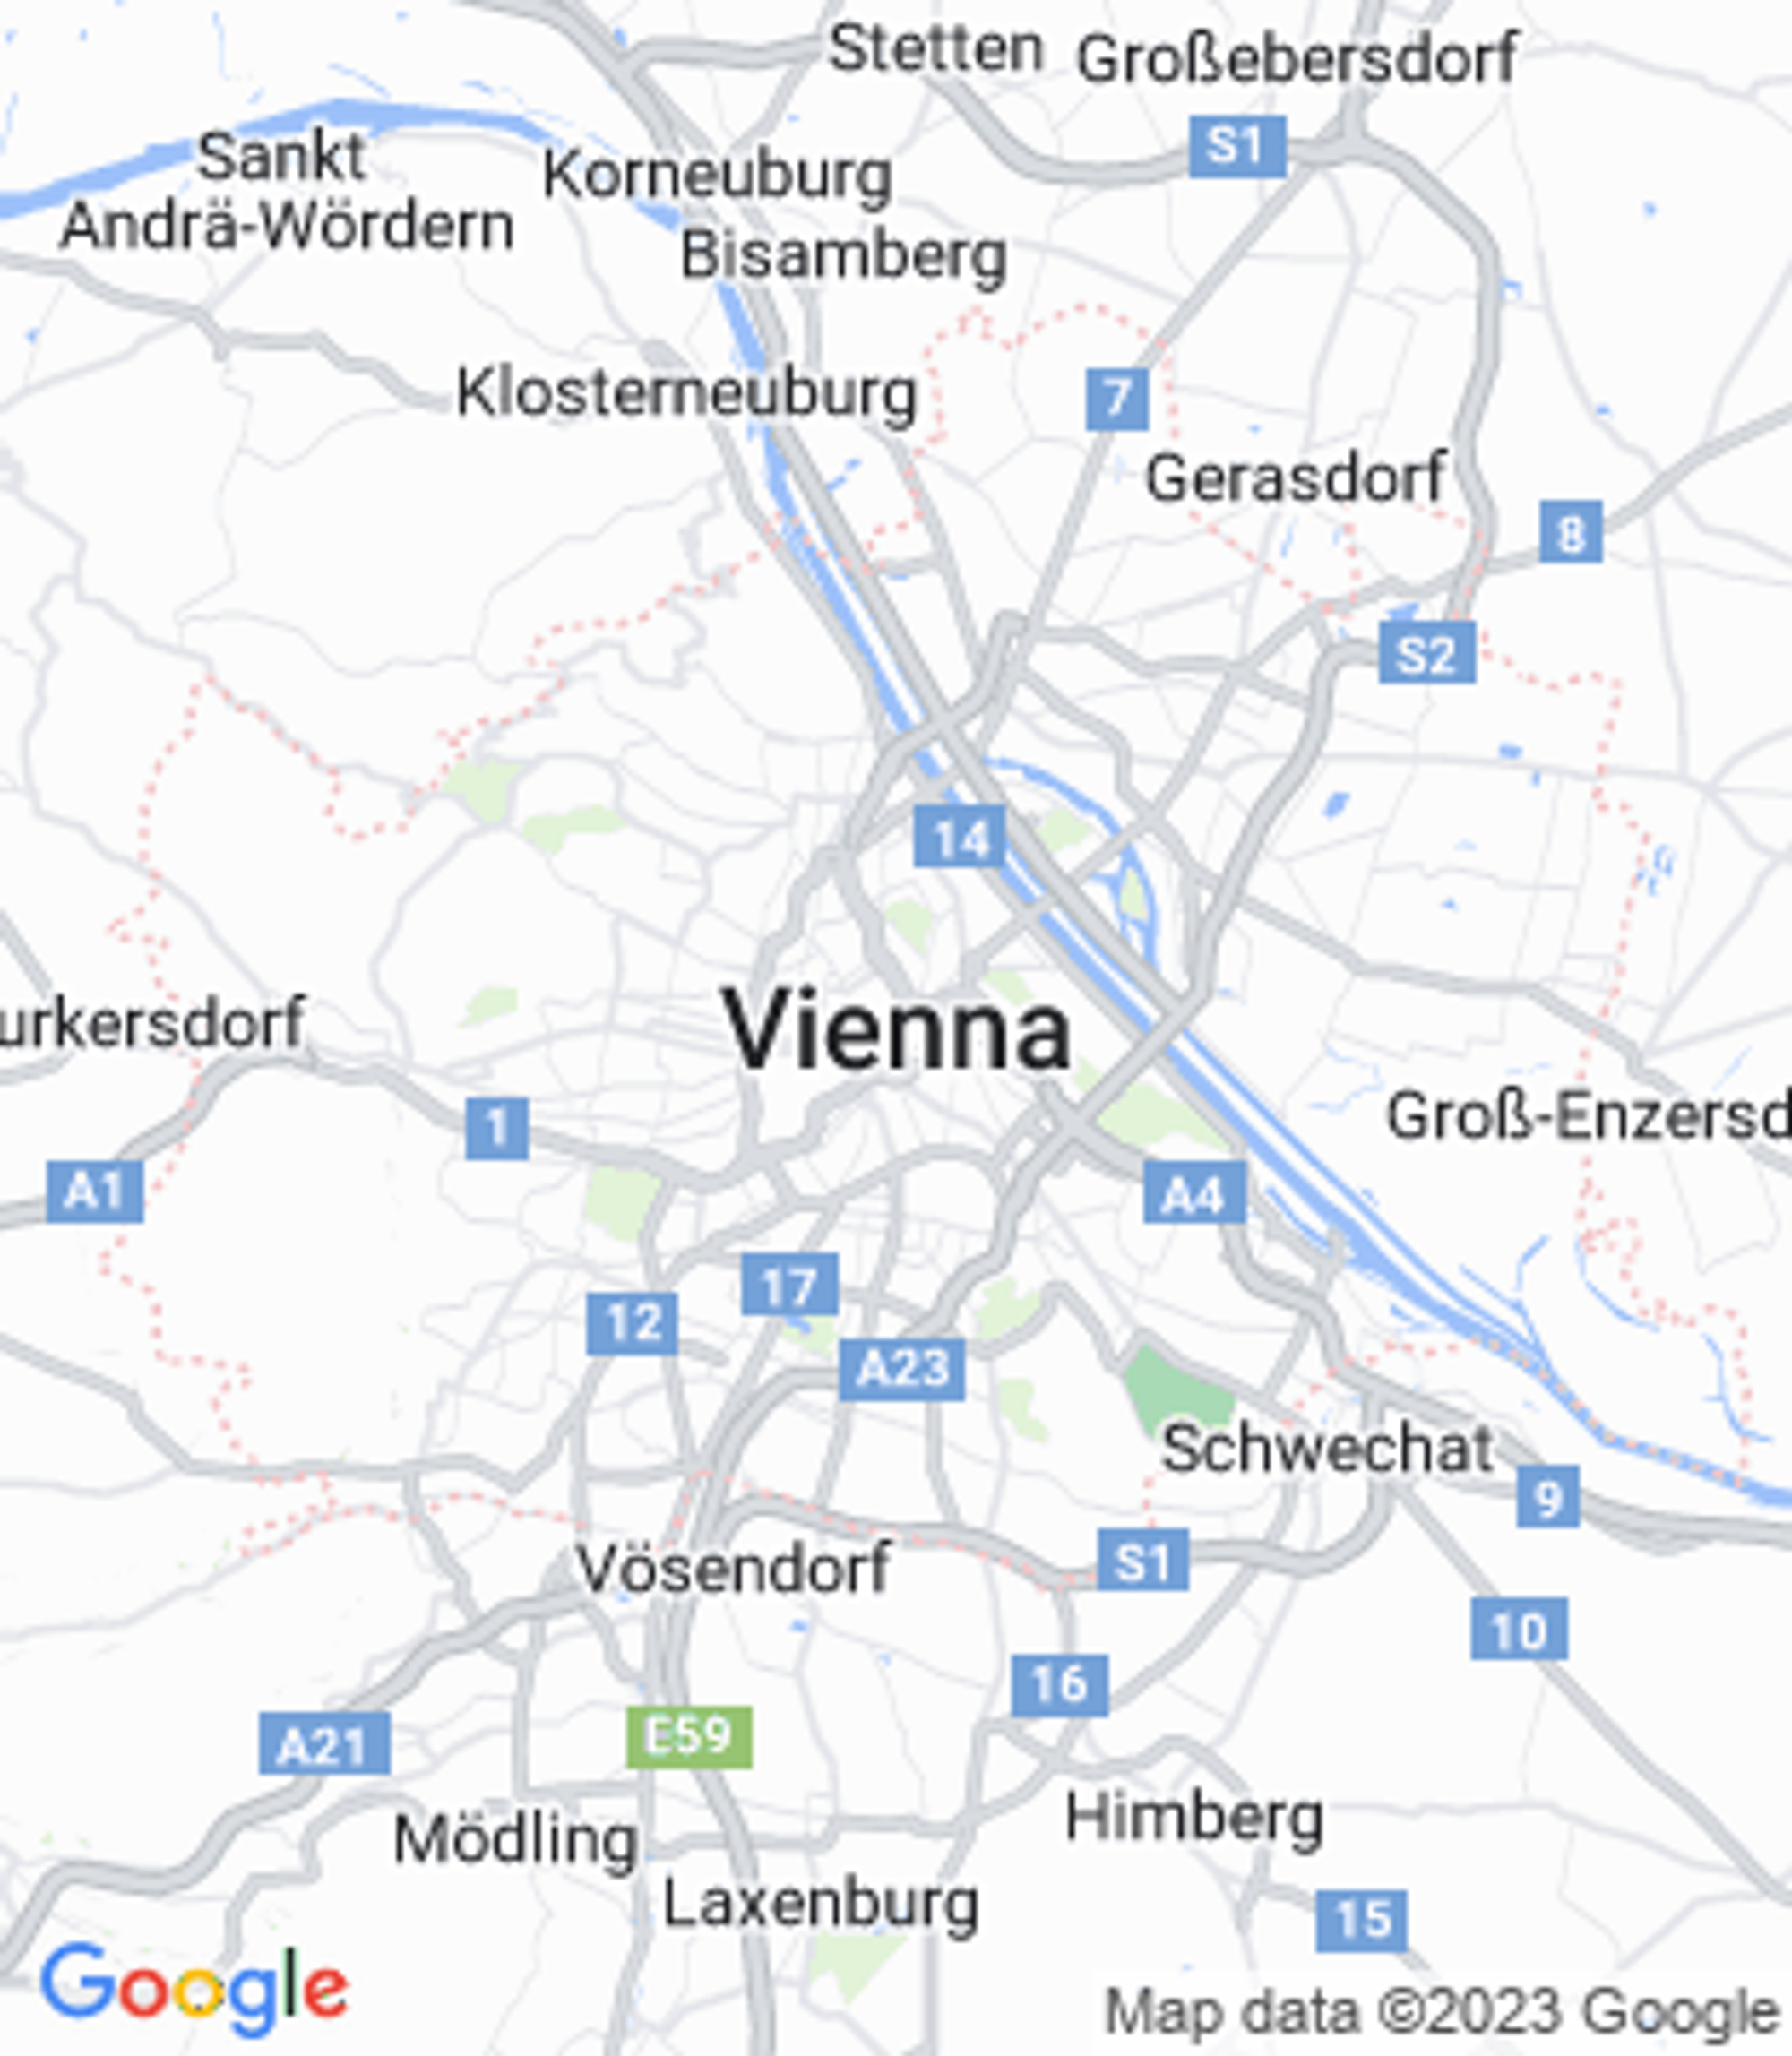 Static map centered on Vienna, Austria:
?size=312x358
&map_id=cf19af61093c176a
&center=Vienna,Austria